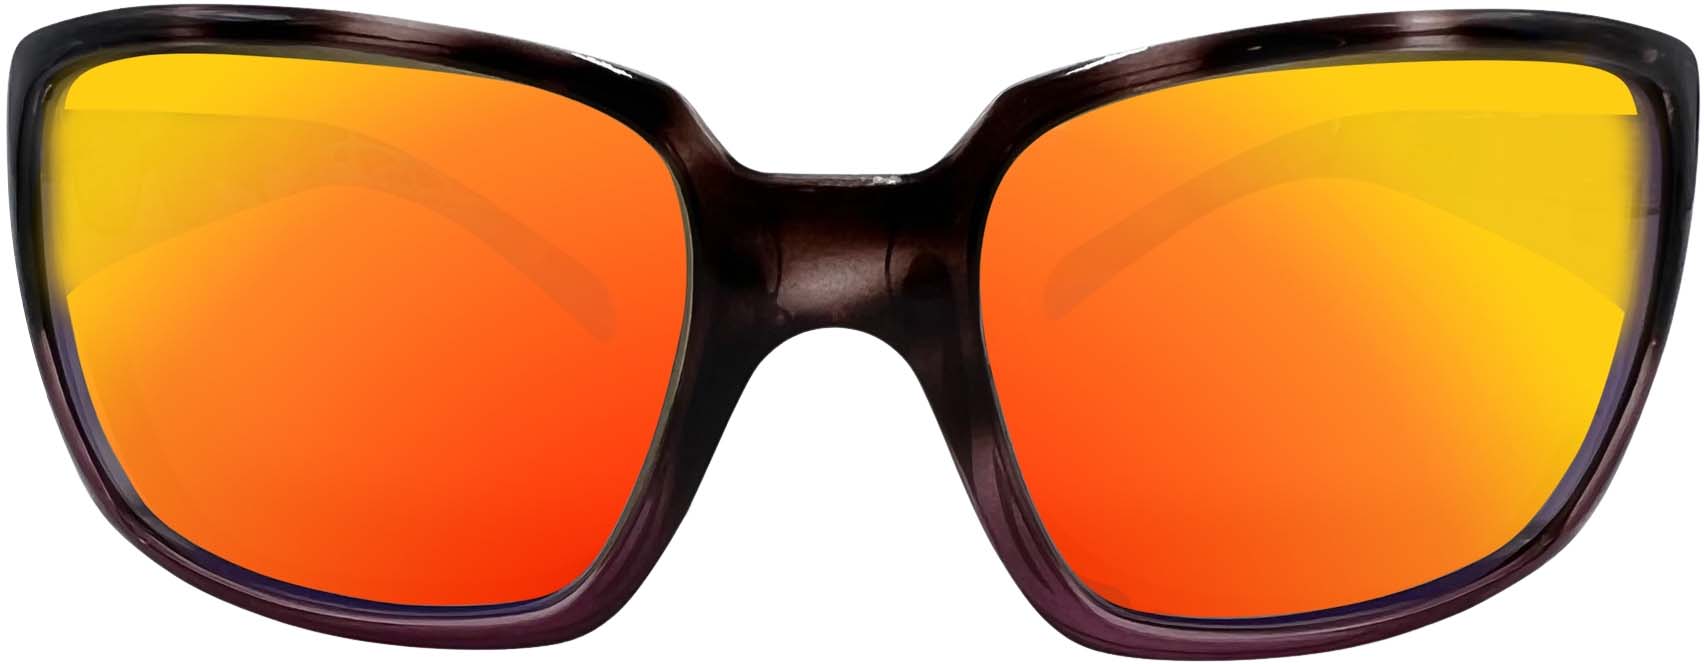 RLVNT Athena Series Sunglasses